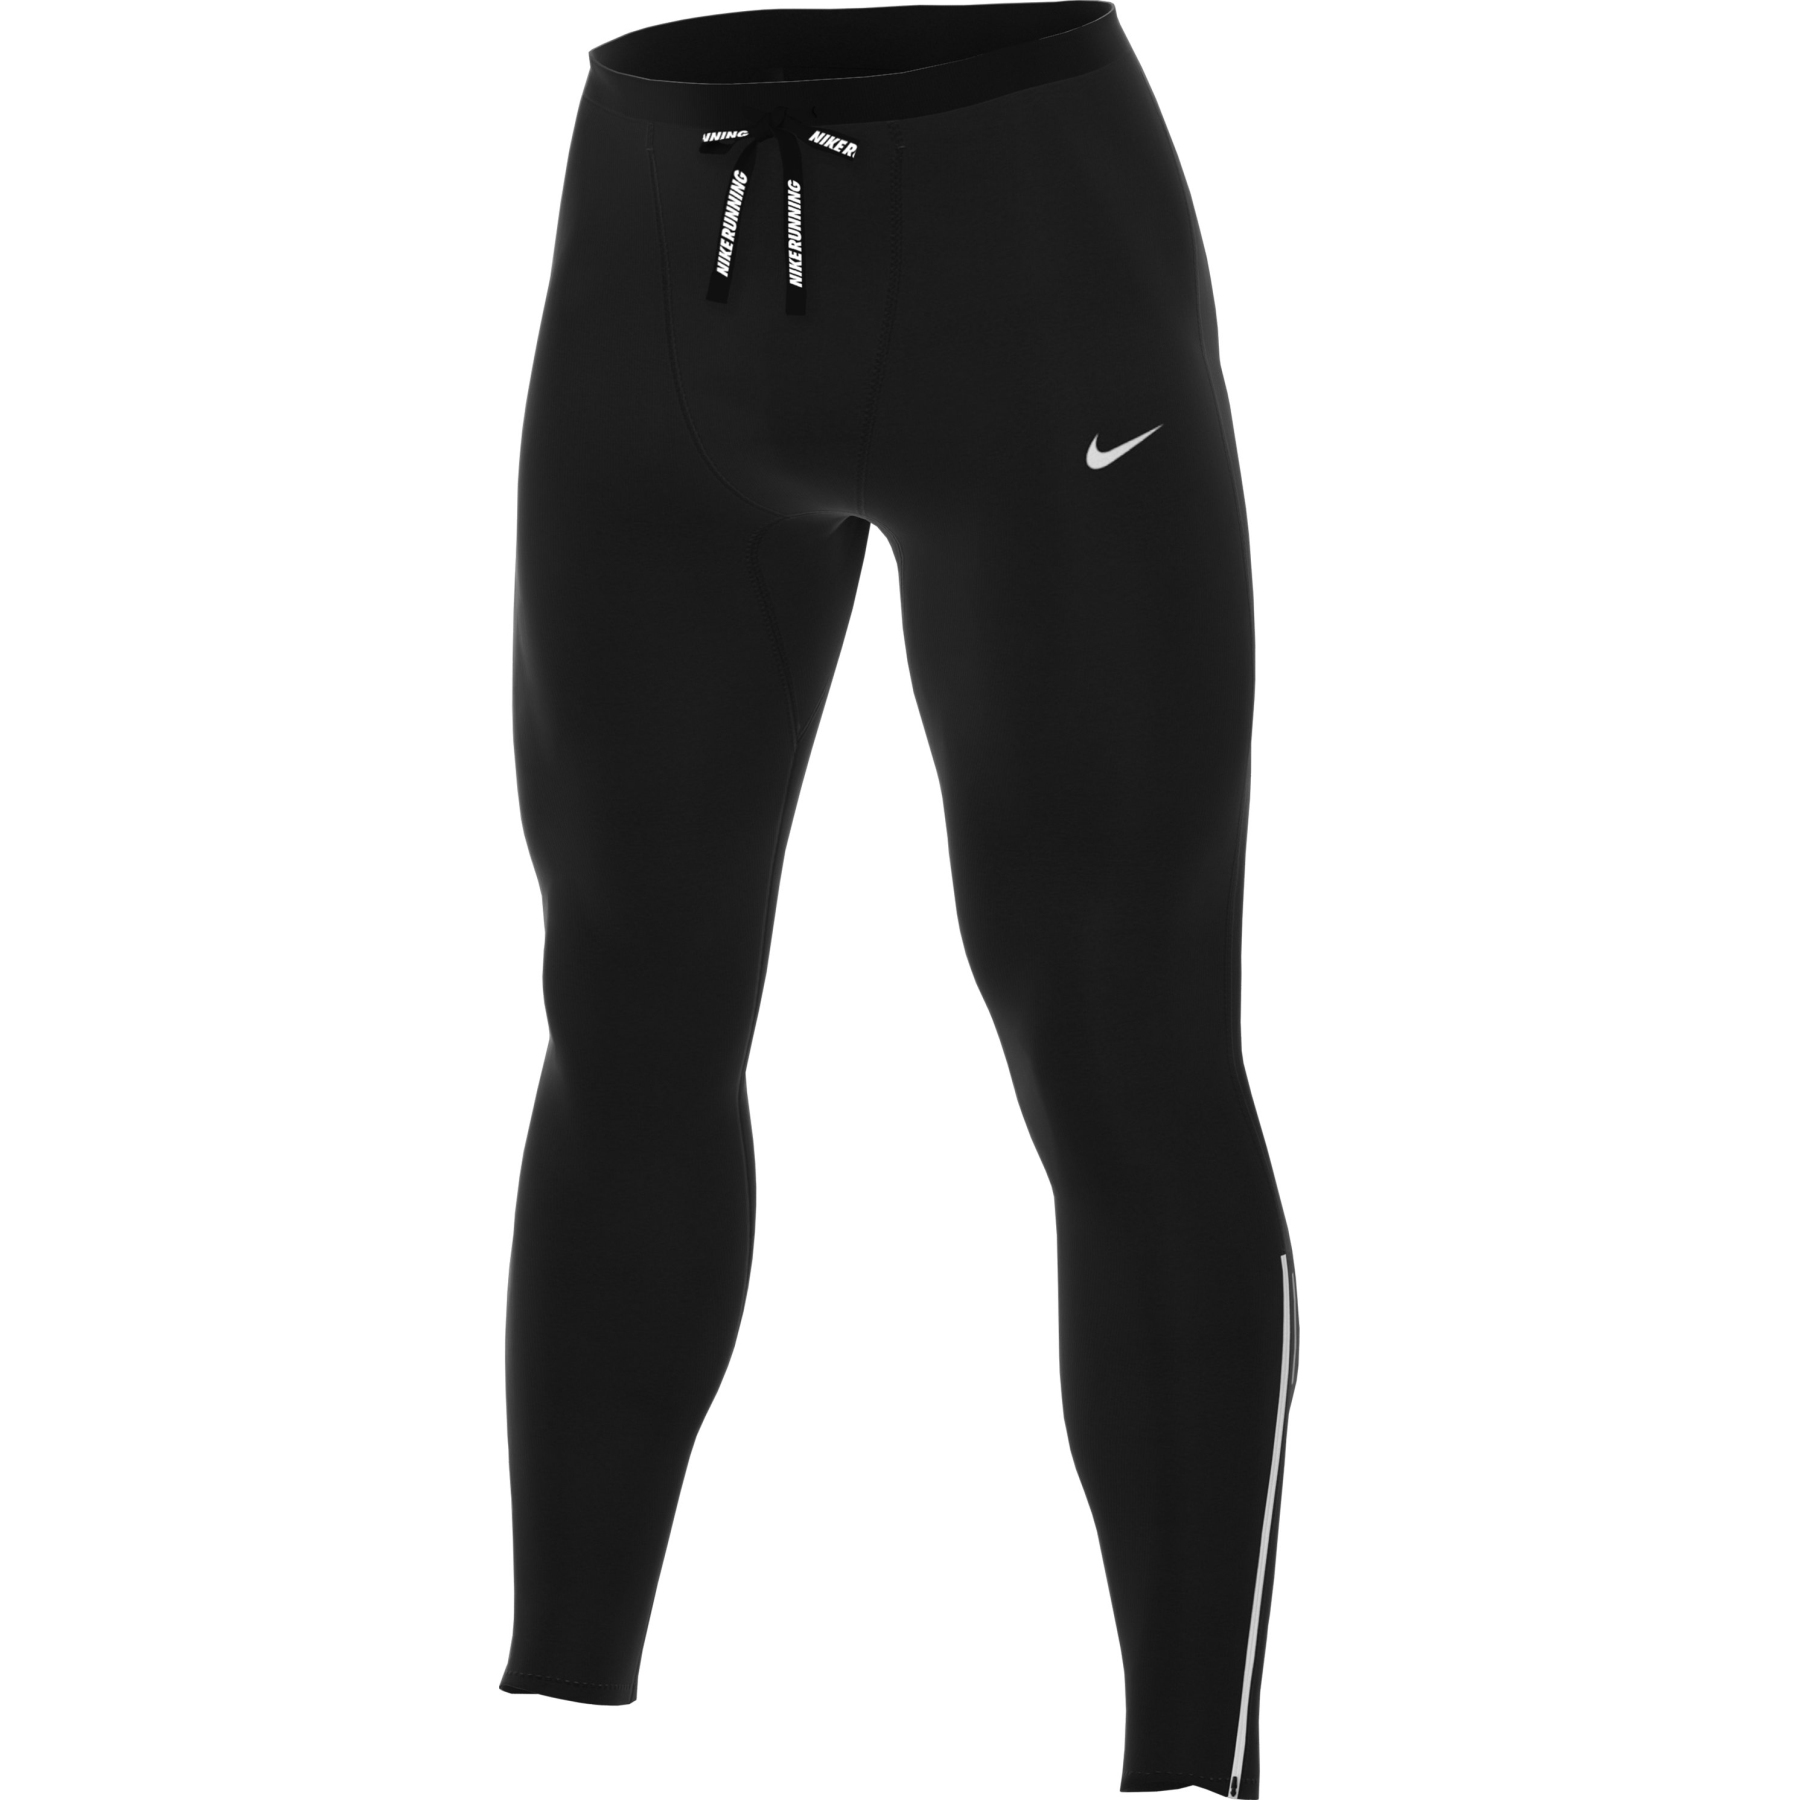 Productfoto van Nike Dri-FIT Essential Hardlooptights Heren - black/reflective silver CZ8830-010